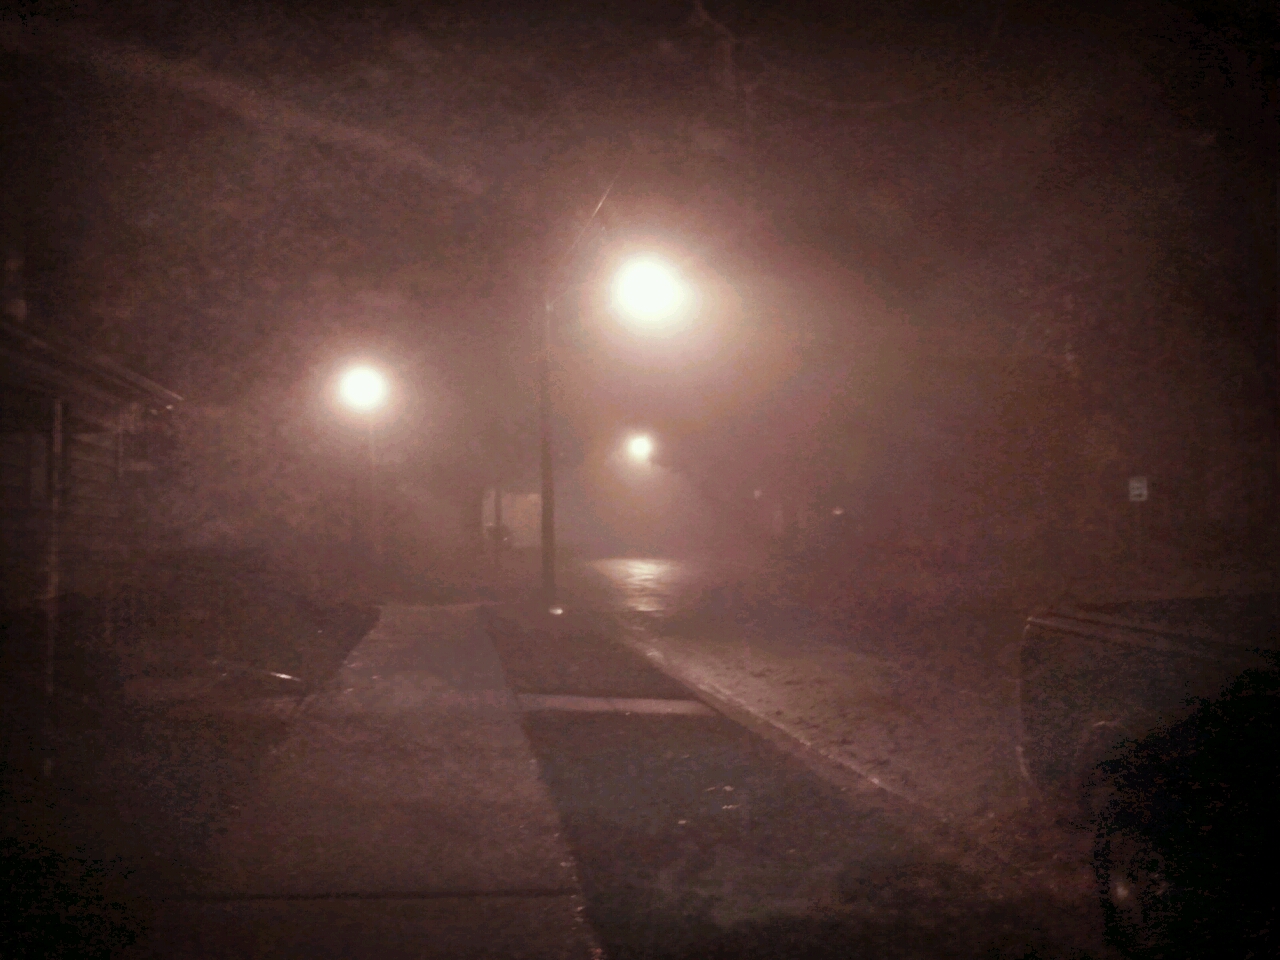 a light pole in a dark fog filled city street